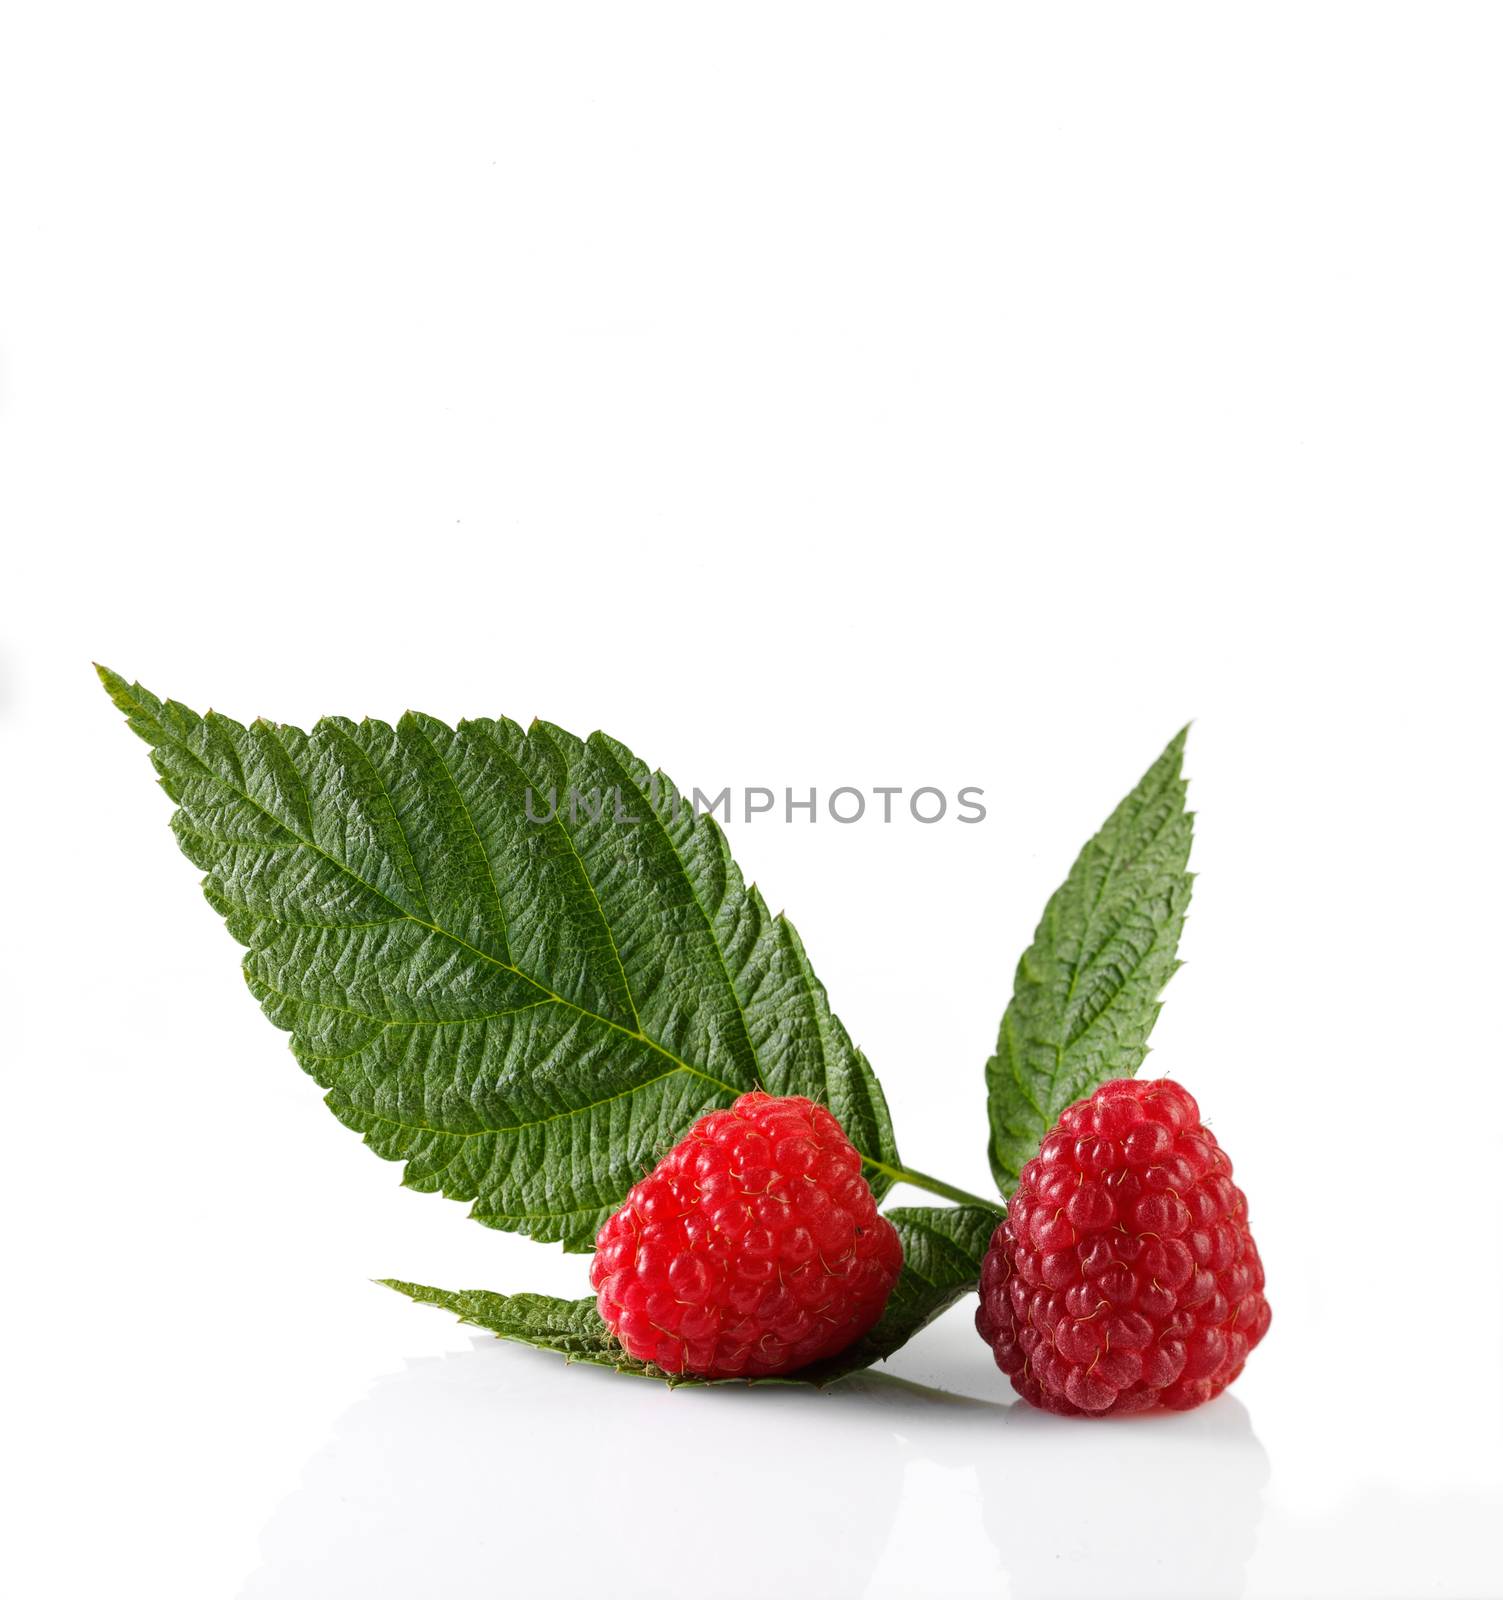 Fresh and ripe raspberryy over white background